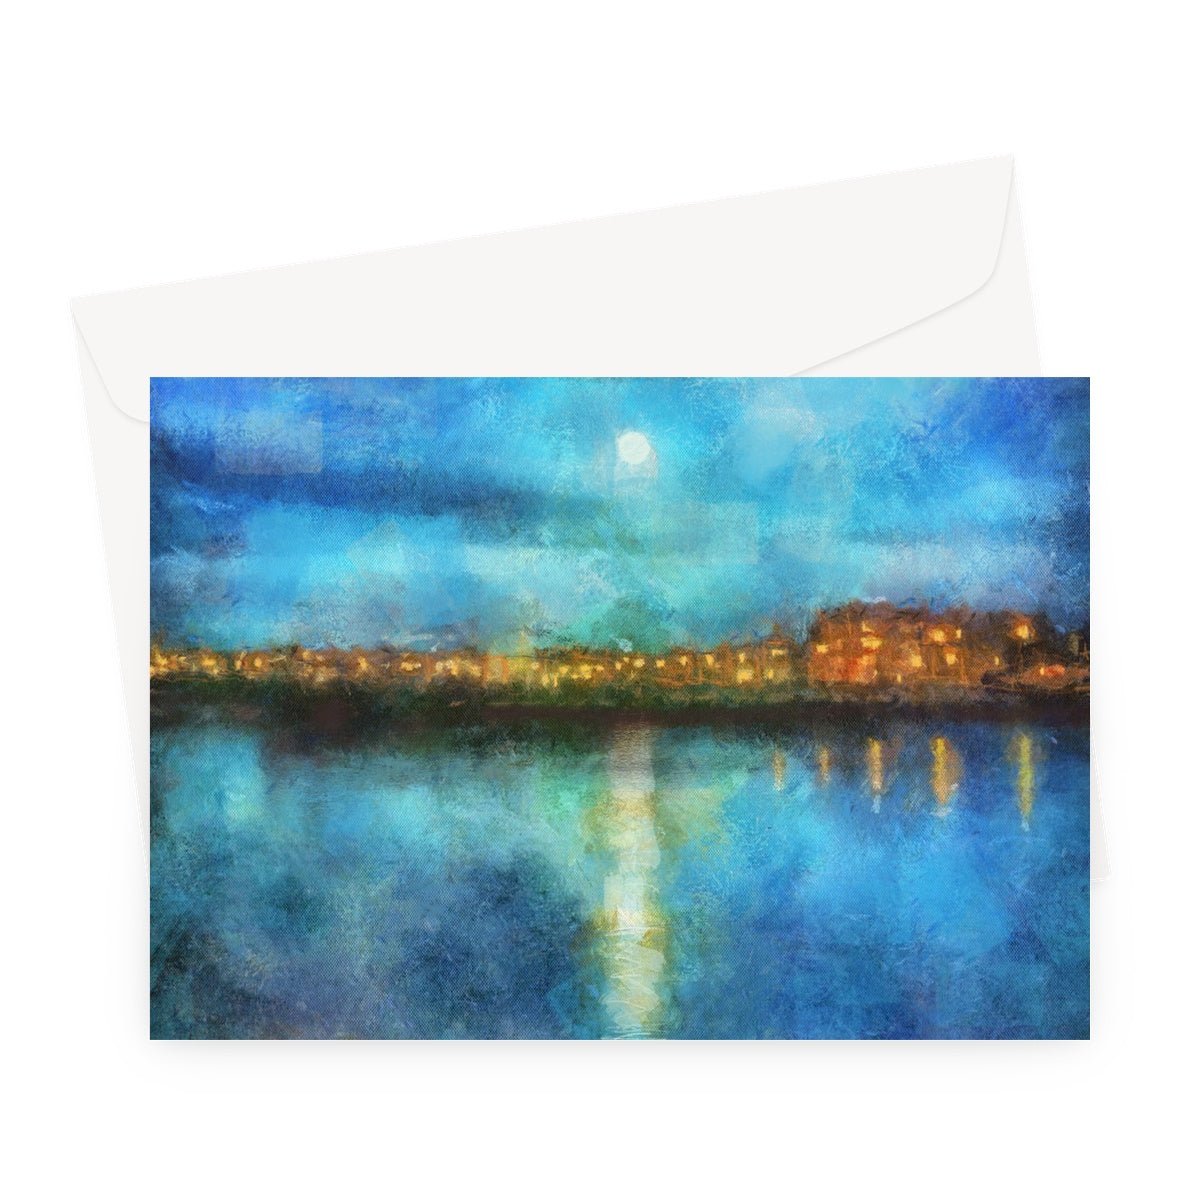 Portobello Moonlight Edinburgh Art Gifts Greeting Card-Greetings Cards-Edinburgh & Glasgow Art Gallery-A5 Landscape-1 Card-Paintings, Prints, Homeware, Art Gifts From Scotland By Scottish Artist Kevin Hunter